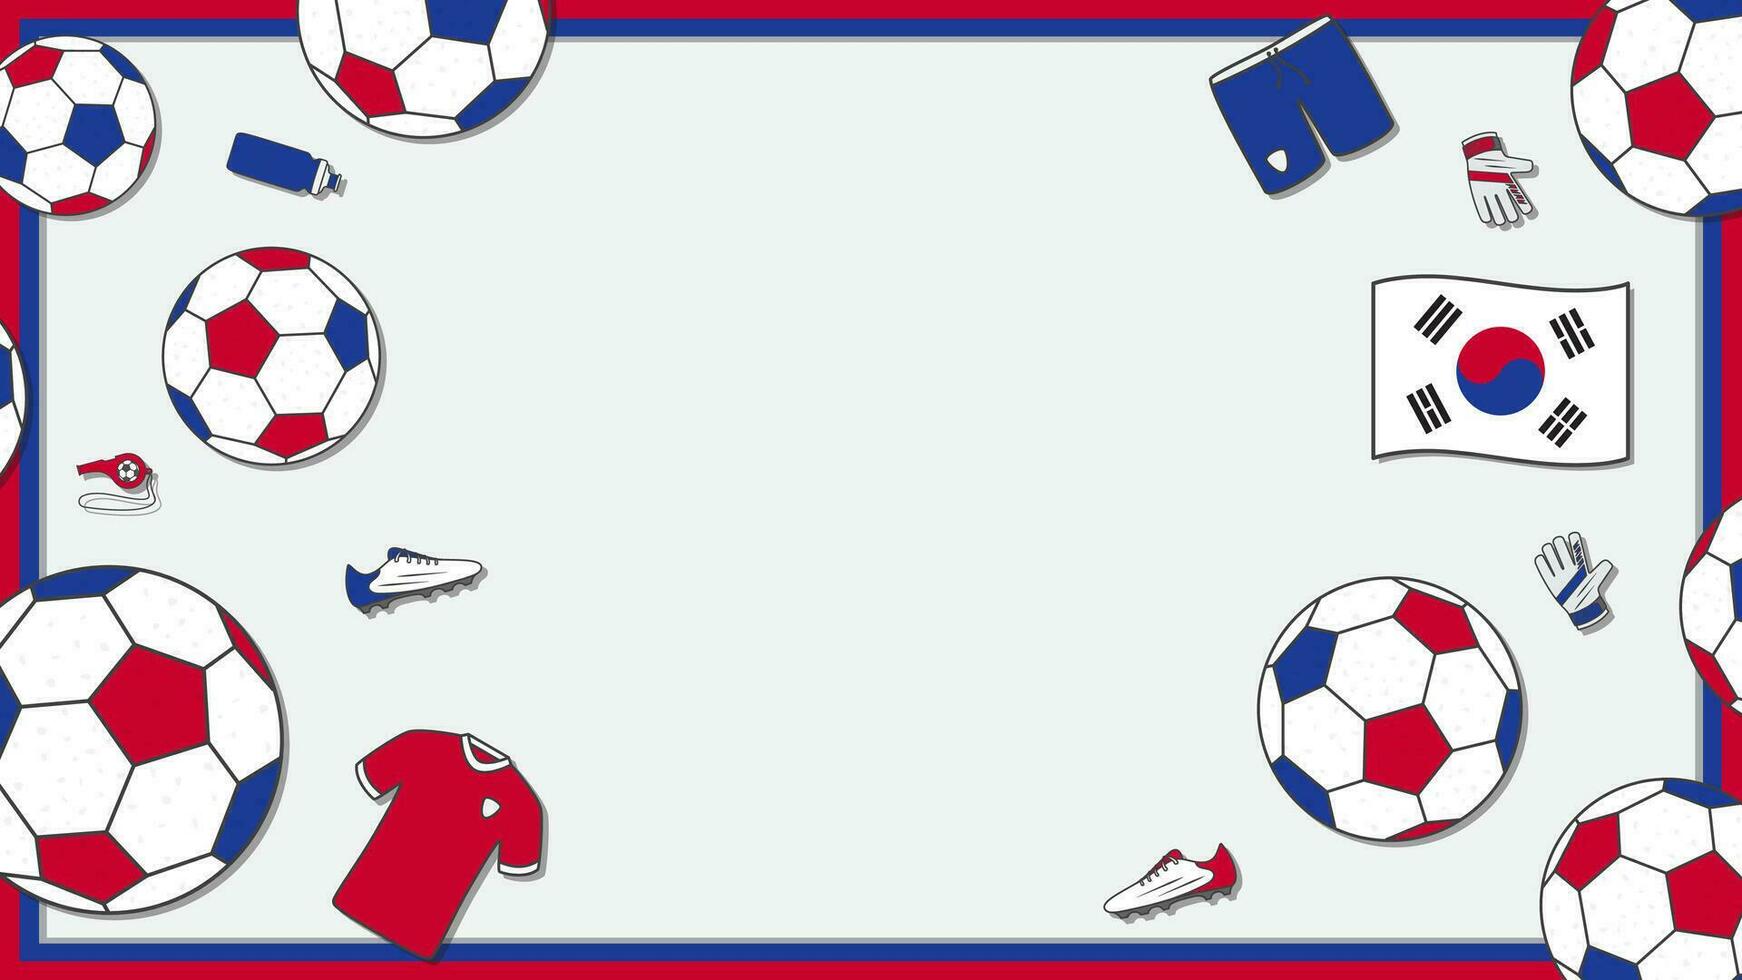 Football Background Design Template. Football Cartoon Vector Illustration. Sport In South Korea